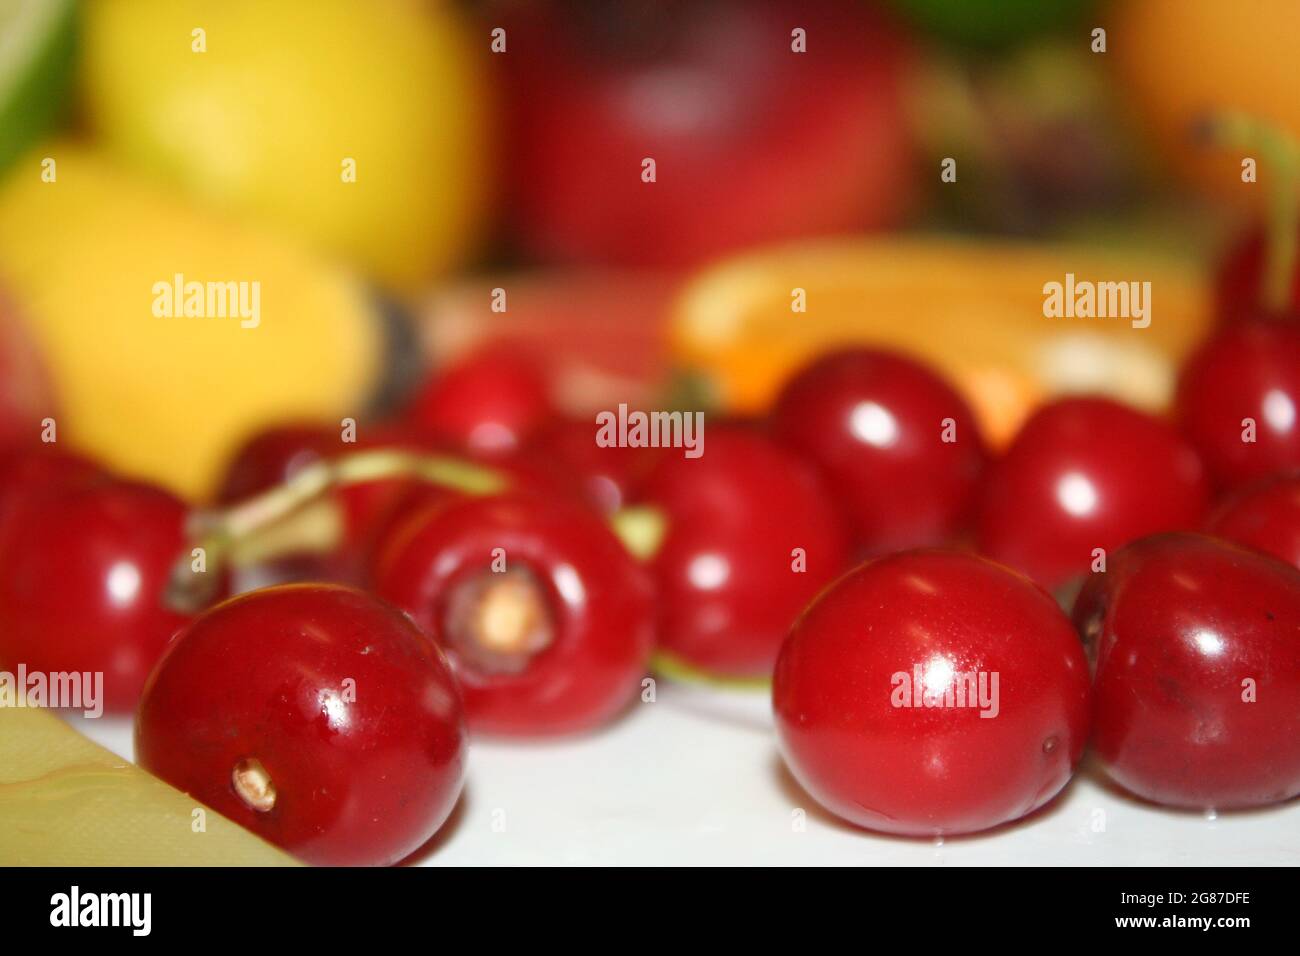 fruits Stock Photo